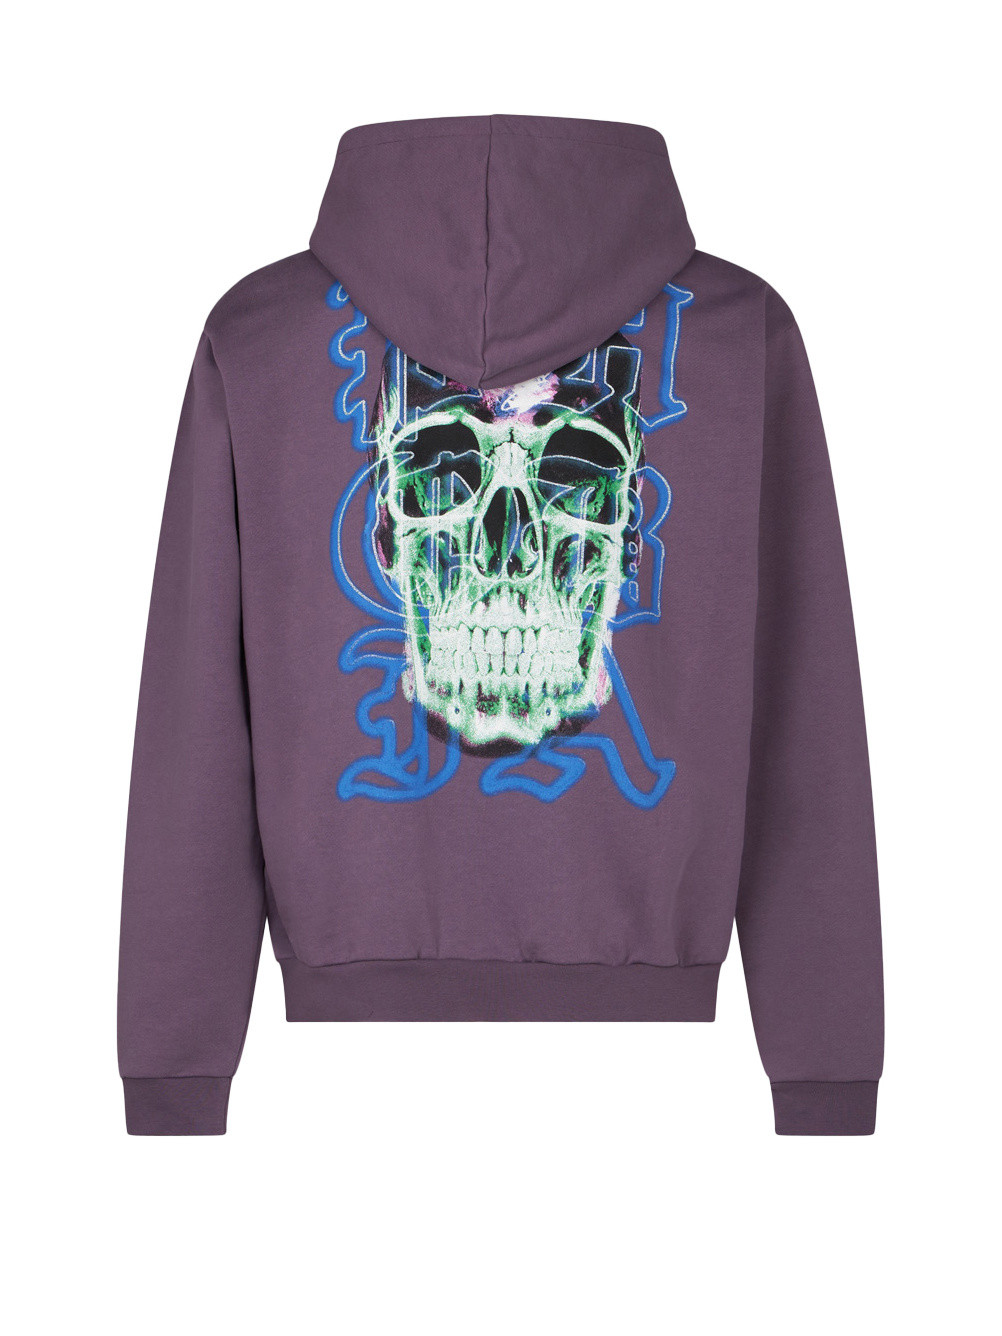 Phobia - Cotton sweatshirt with print, Purple, large image number 3